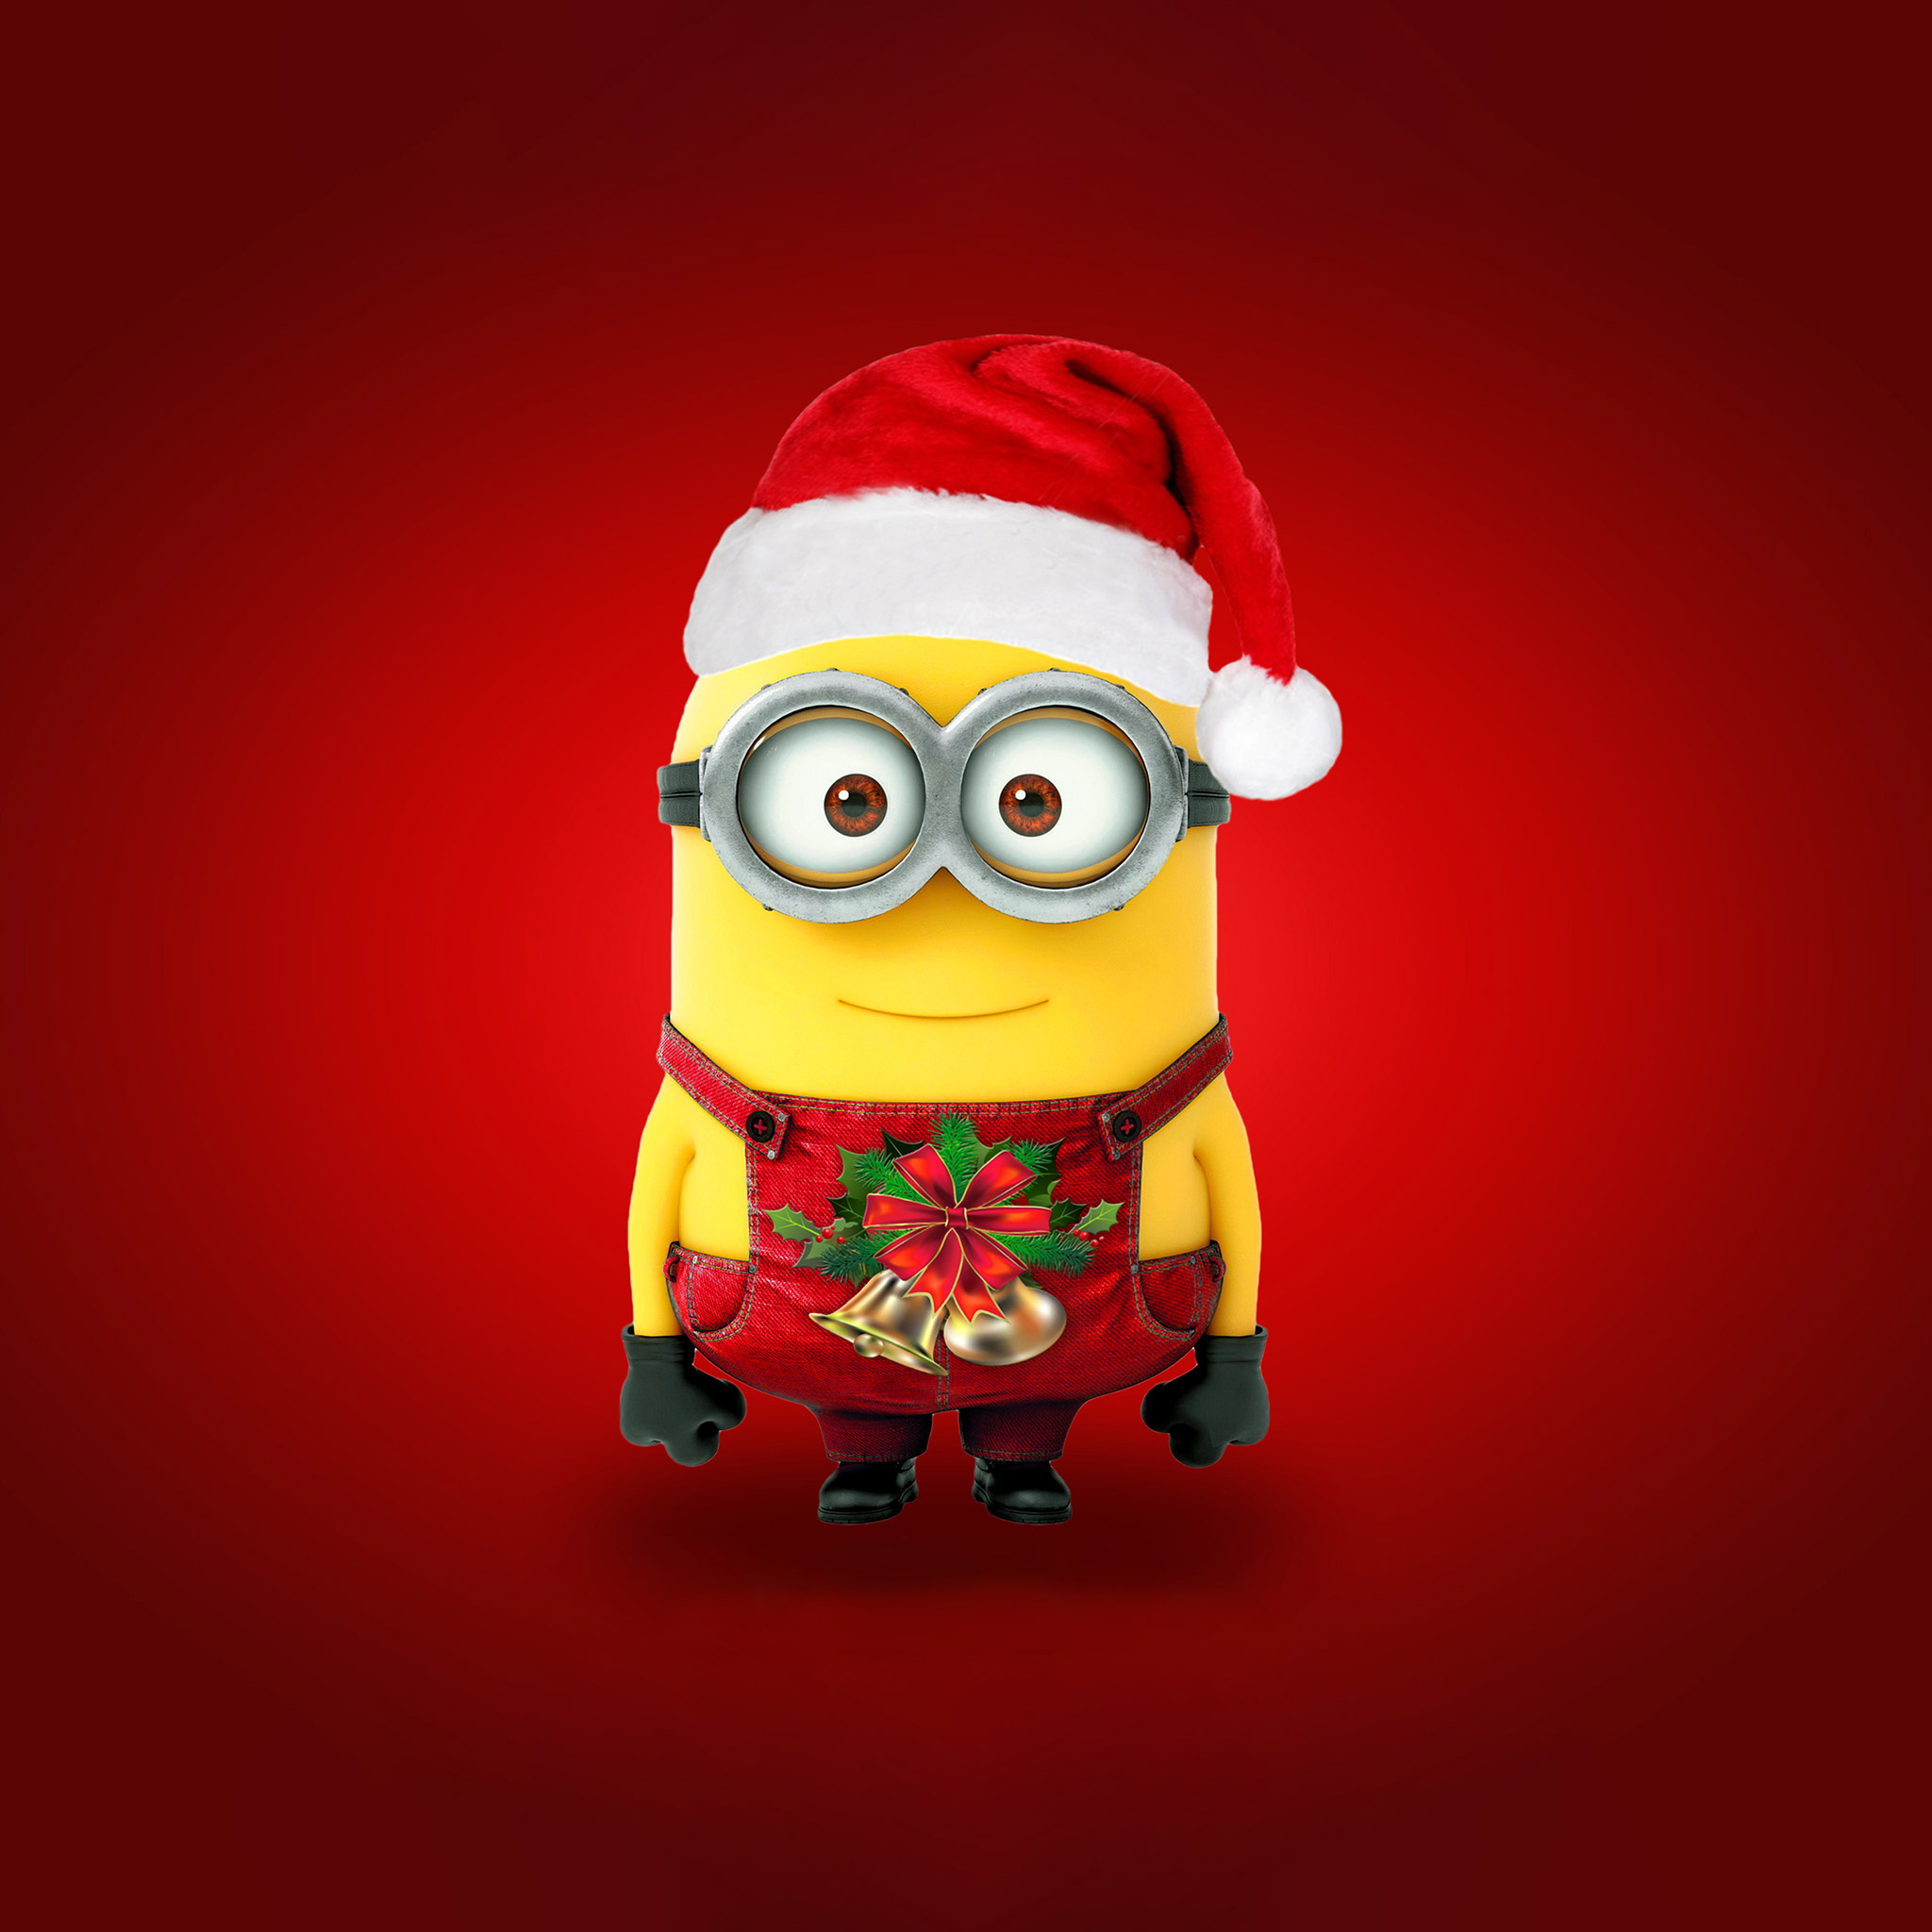 Merry Christmas Minions - HD Wallpaper 